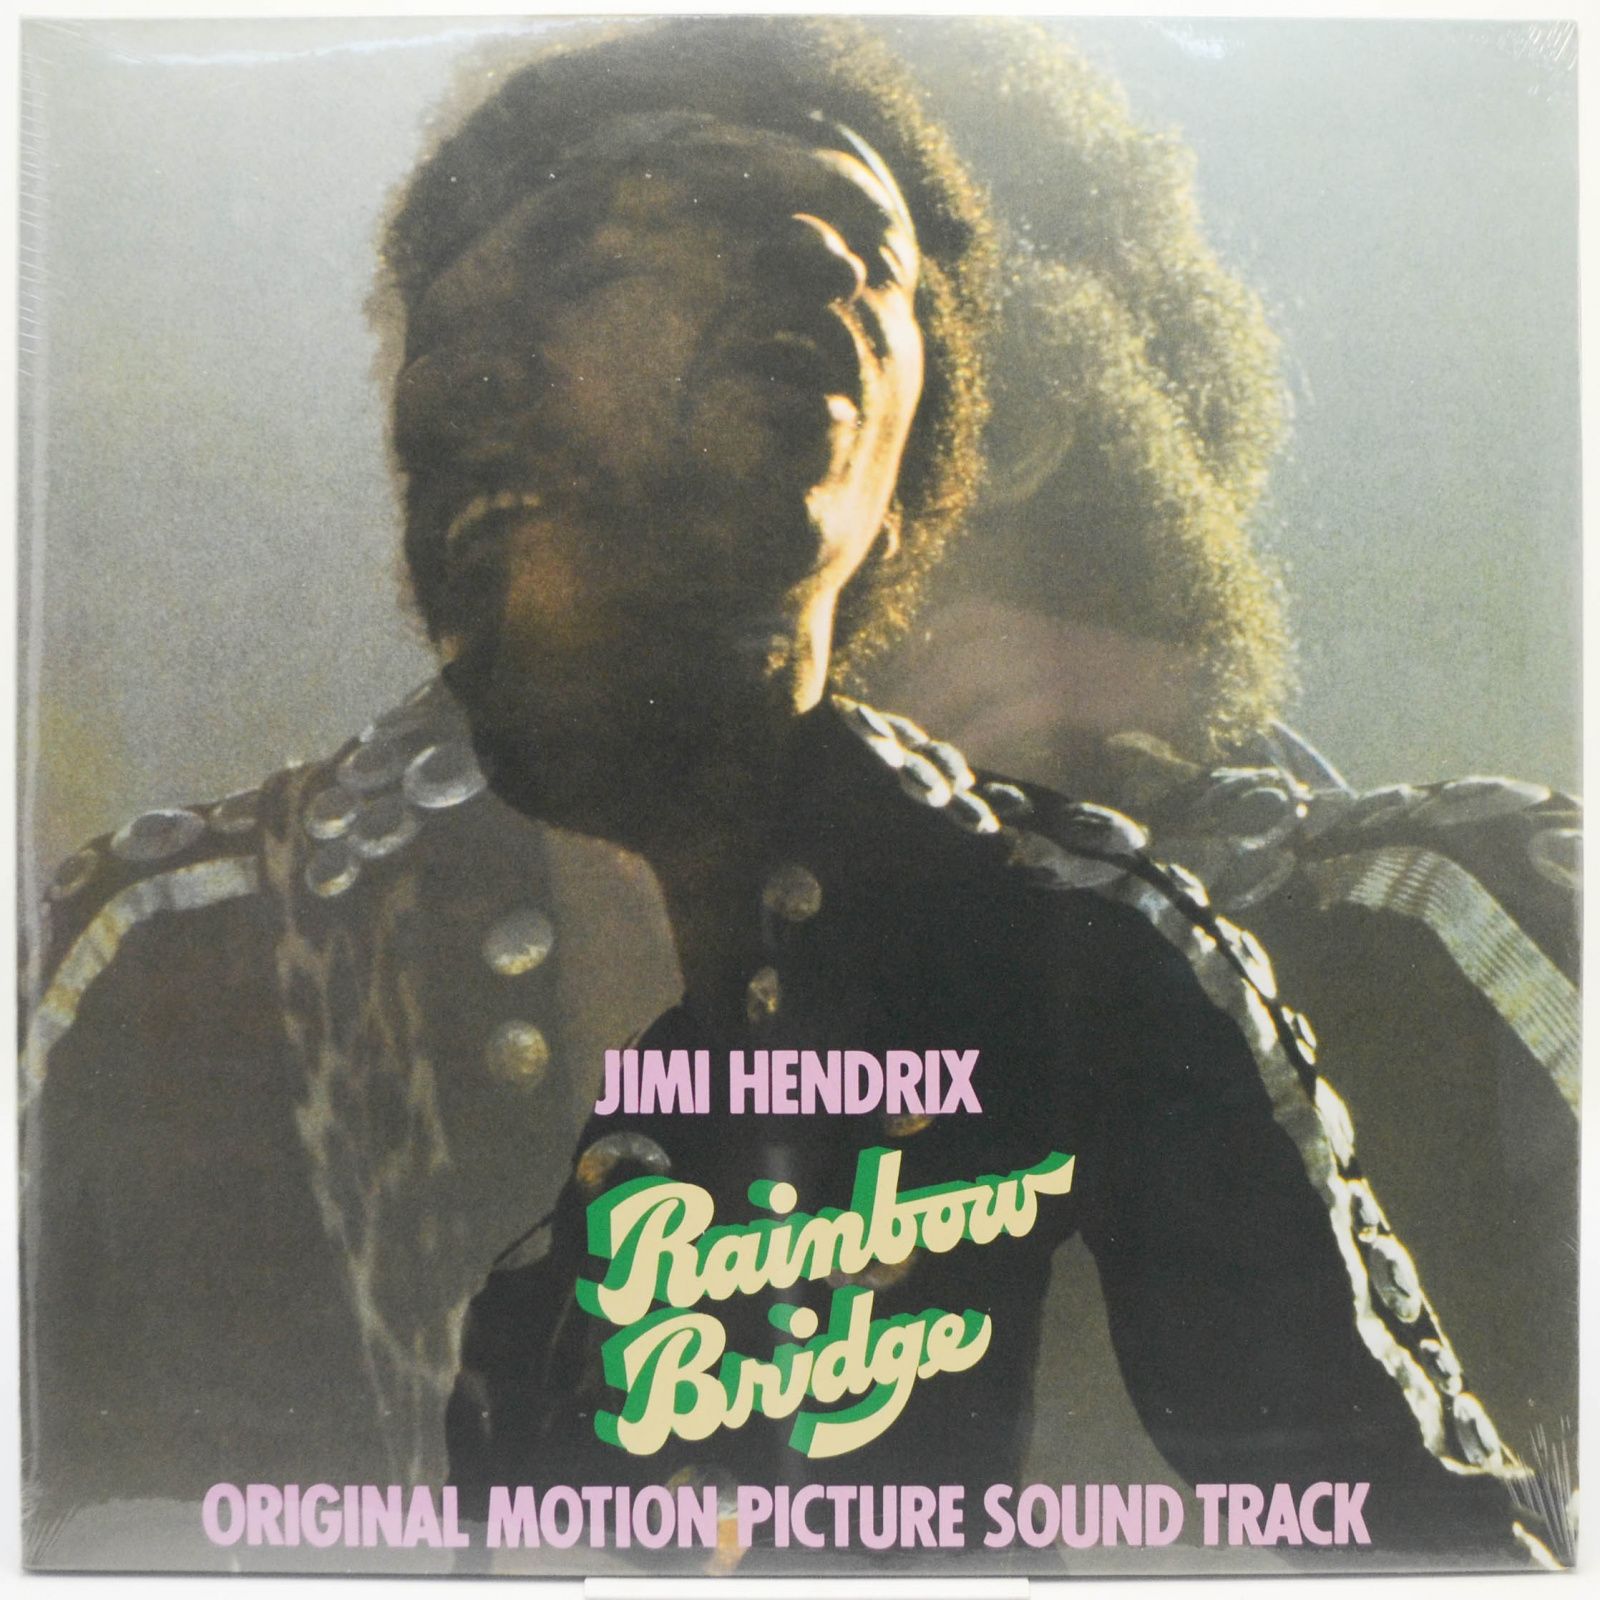 Rainbow Bridge - Original Motion Picture Sound Track, 1971